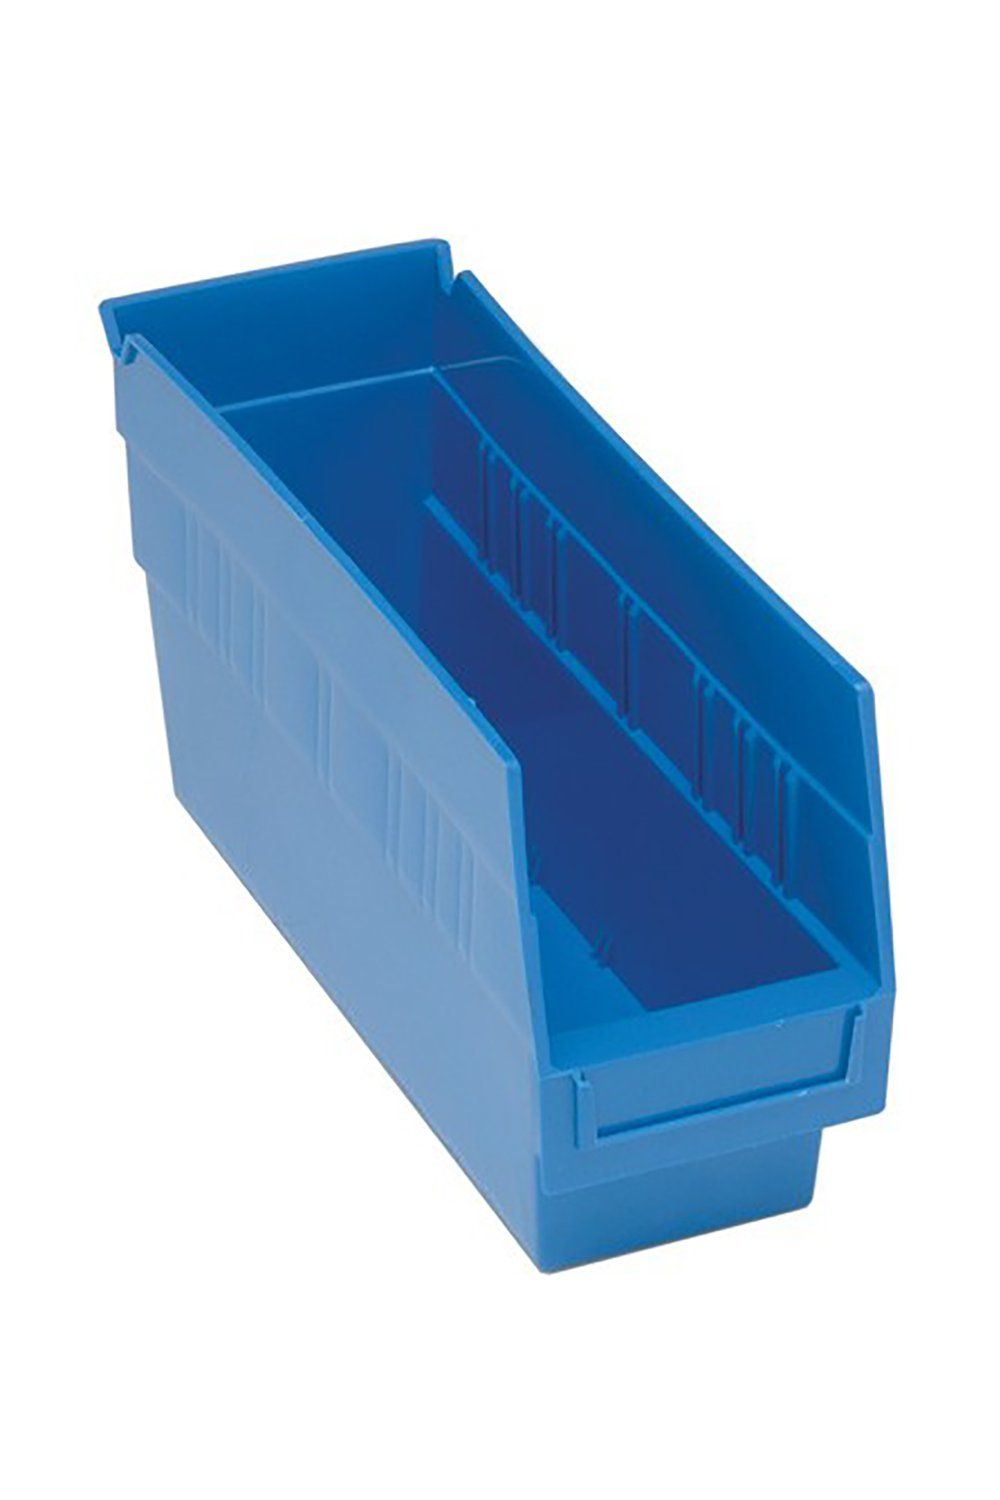 Shelf Bin for 12"D Shelves Bins & Containers Acart 11-5/8'' x 4-1/8'' x 6'' Blue 